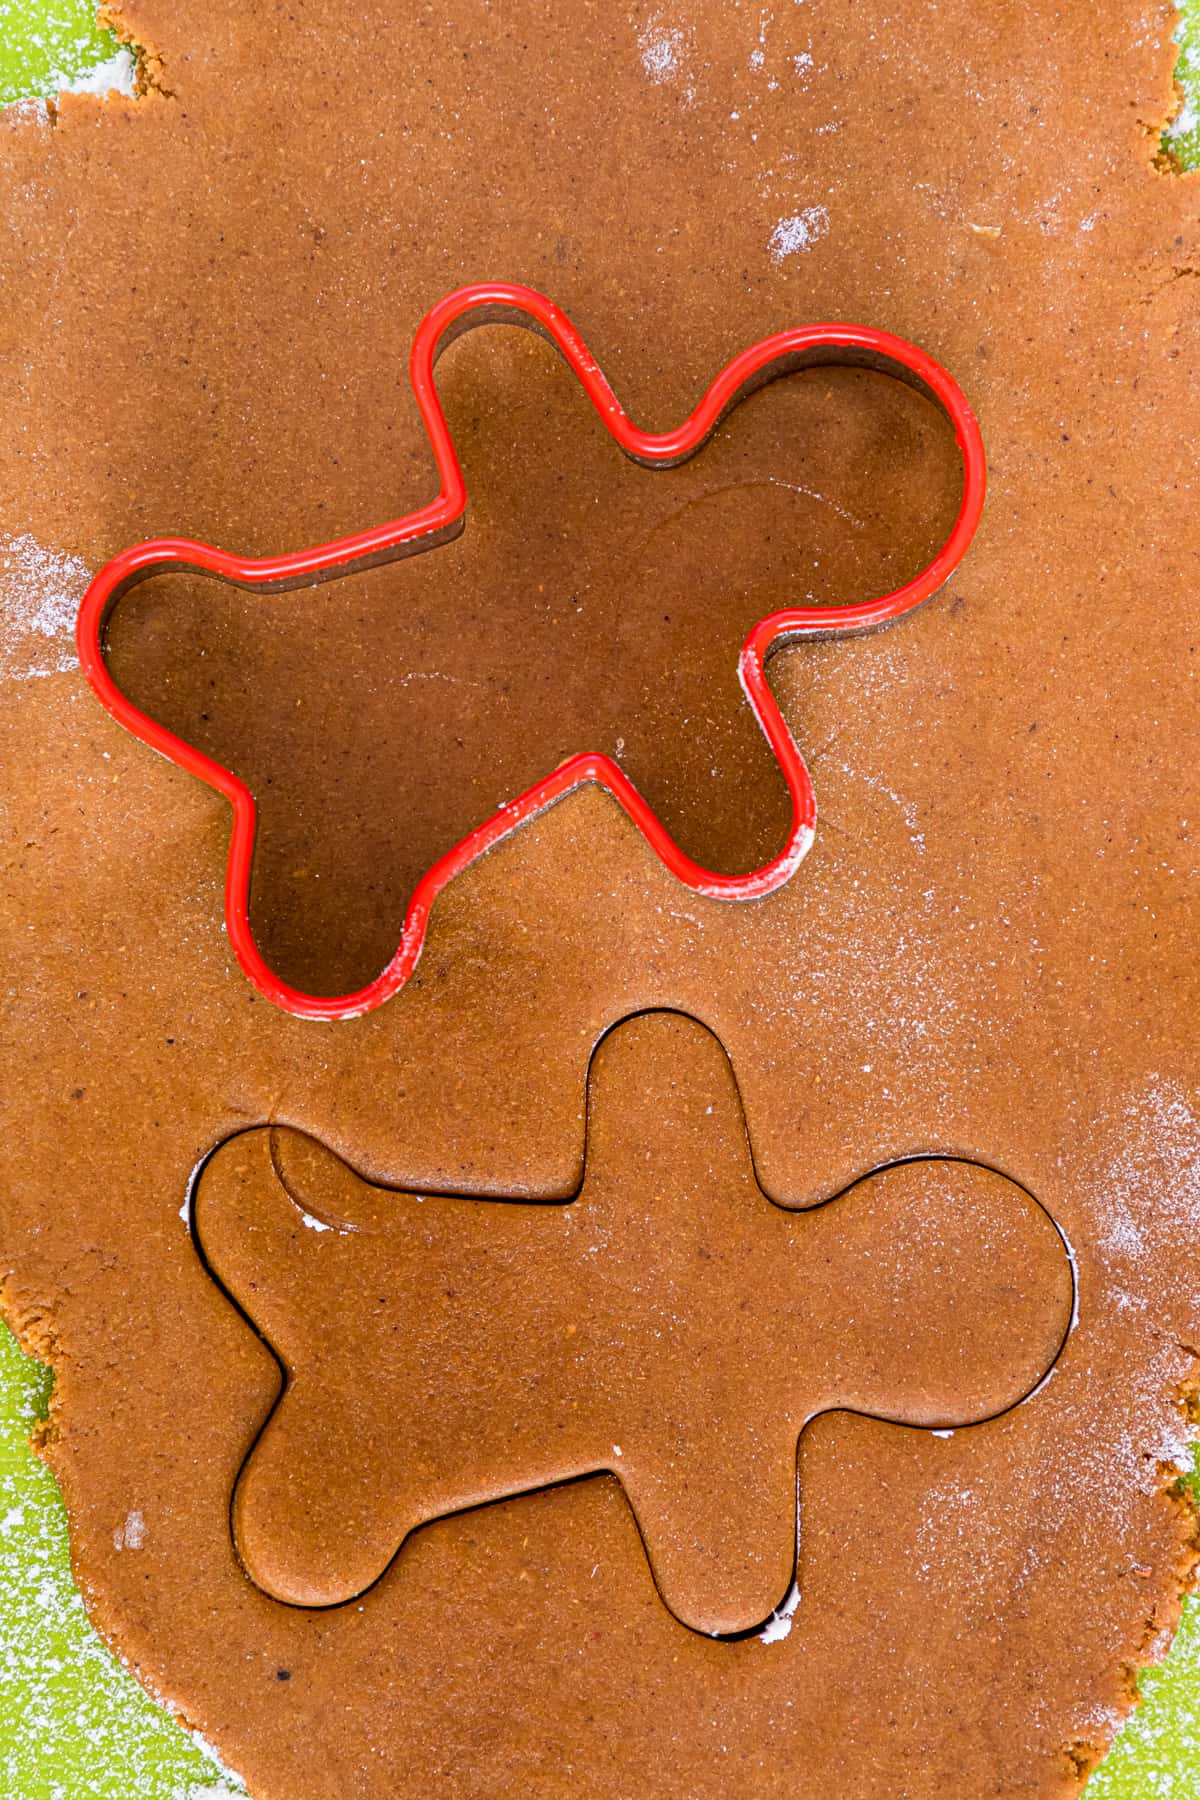 man shaped cookie cutter cutting gingerbread cookie dough